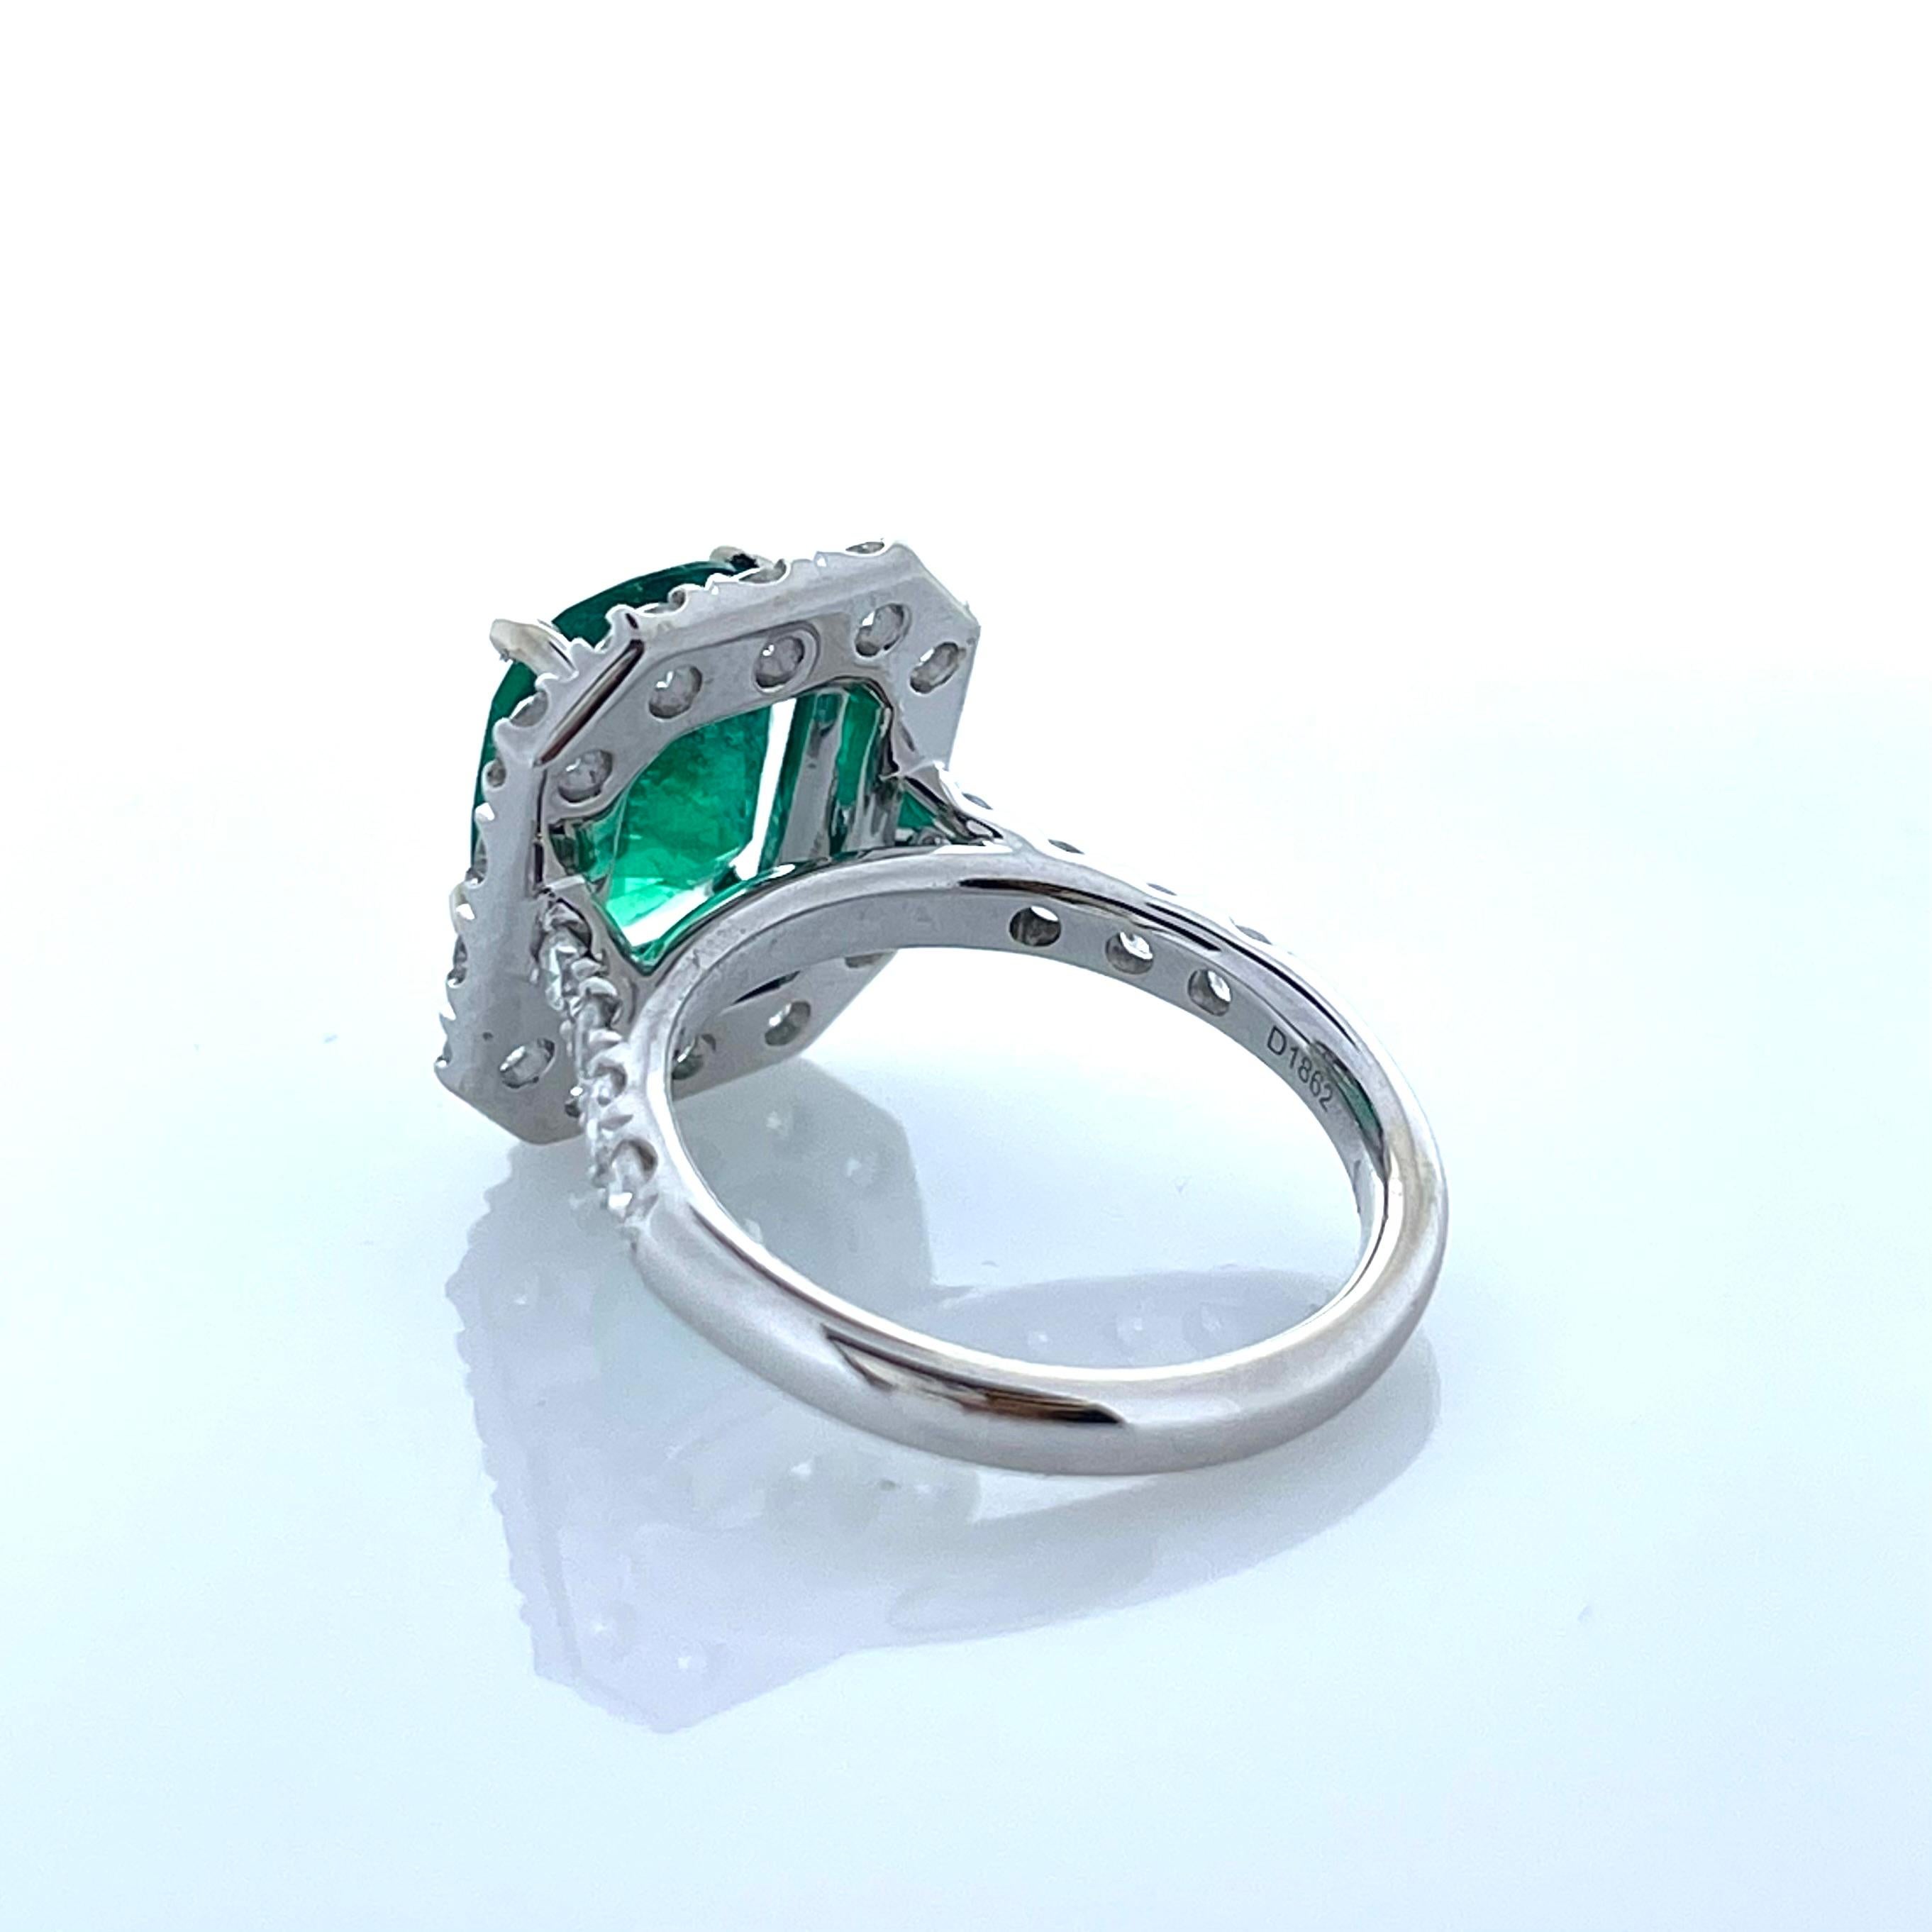 Emerald Cut 3.94 Carat Emerald Cushion Cut & Diamond Ring in 18K White Gold For Sale